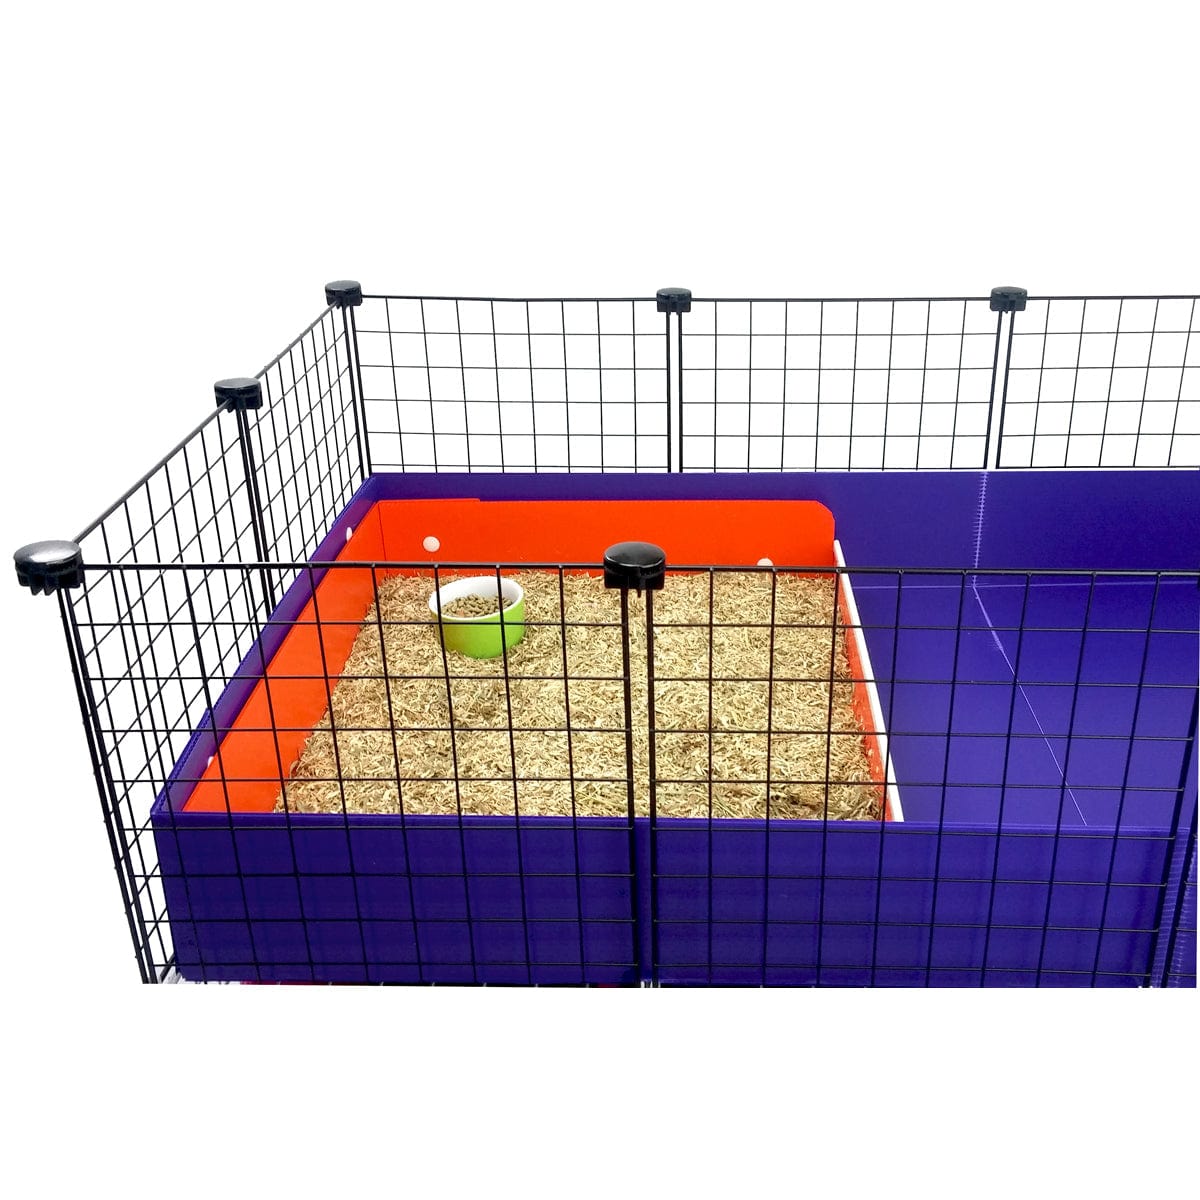 Orange coroplast bistro in a purple C&C guinea pig cage